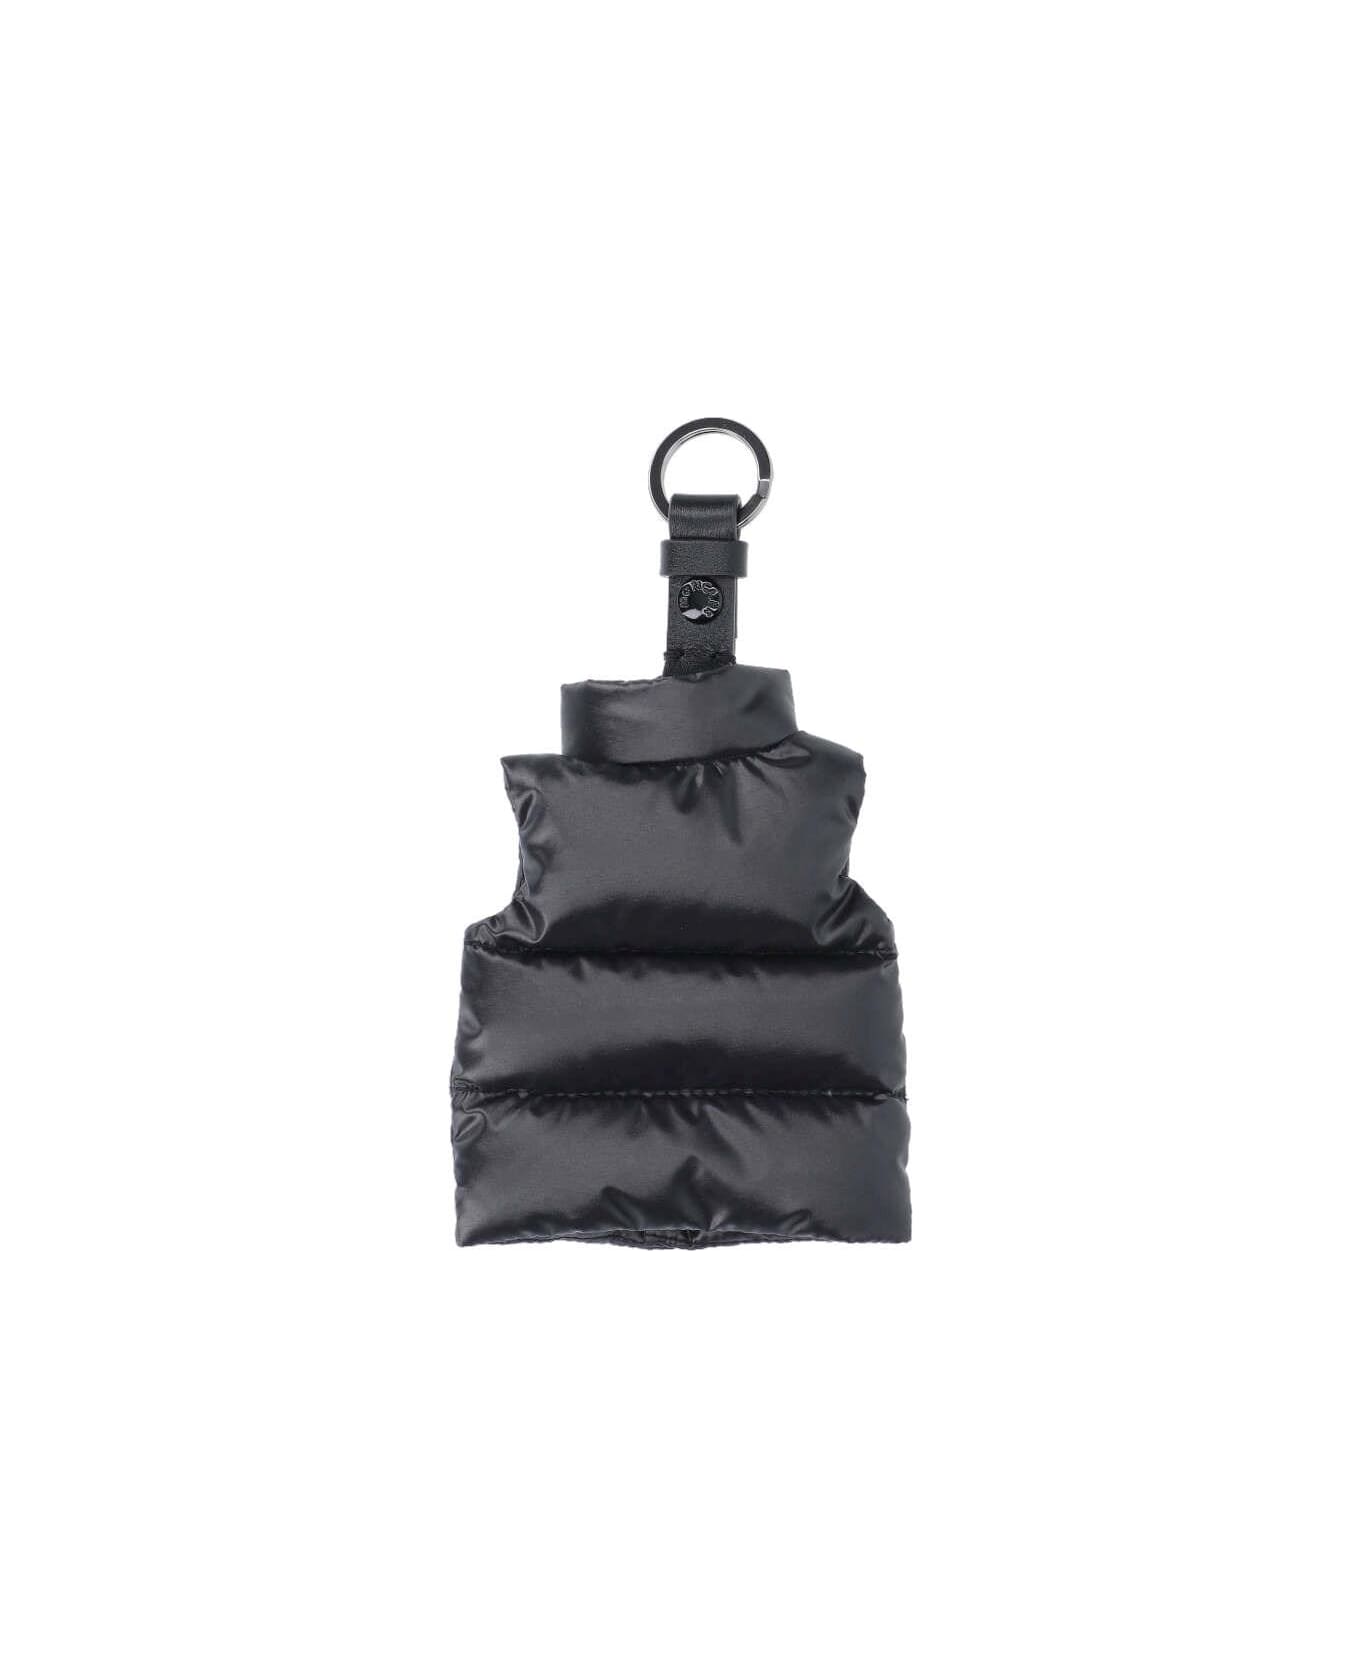 Moncler Keychain Vest - Black